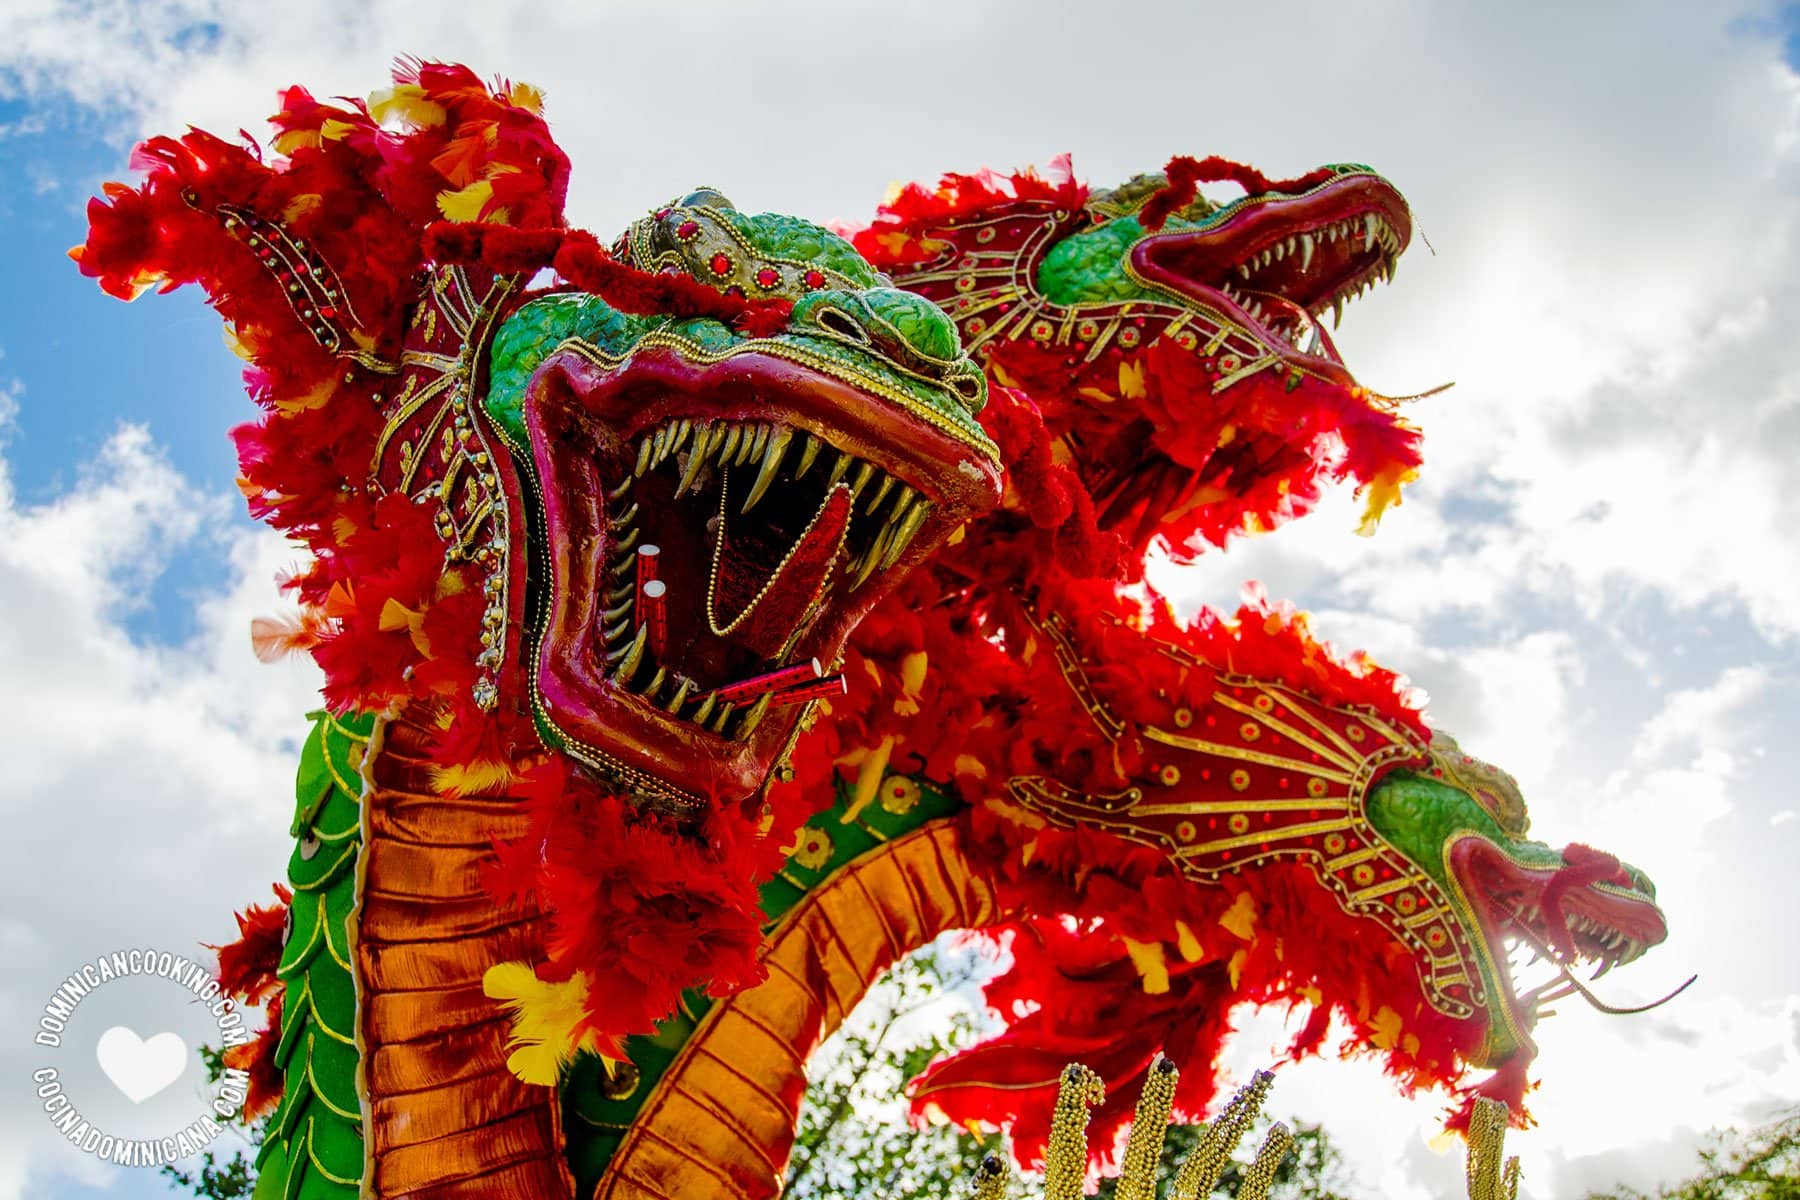 Carroza de carnaval inspirada en un dragon chino